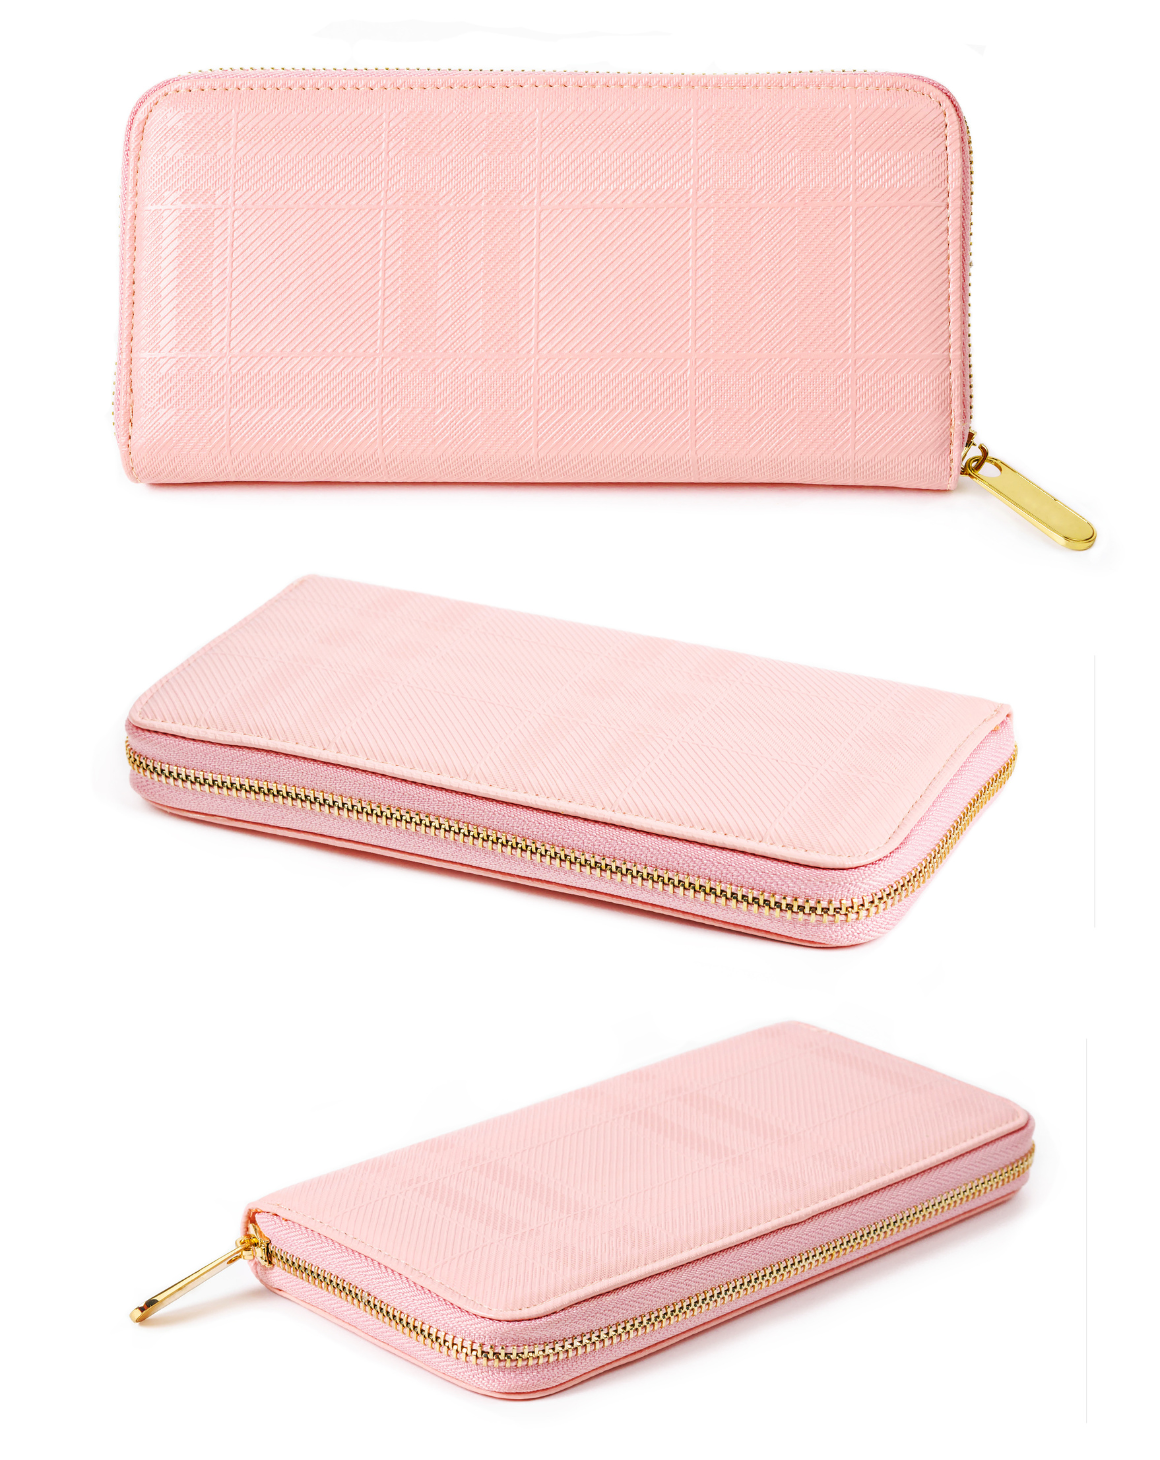 3 pink handbags